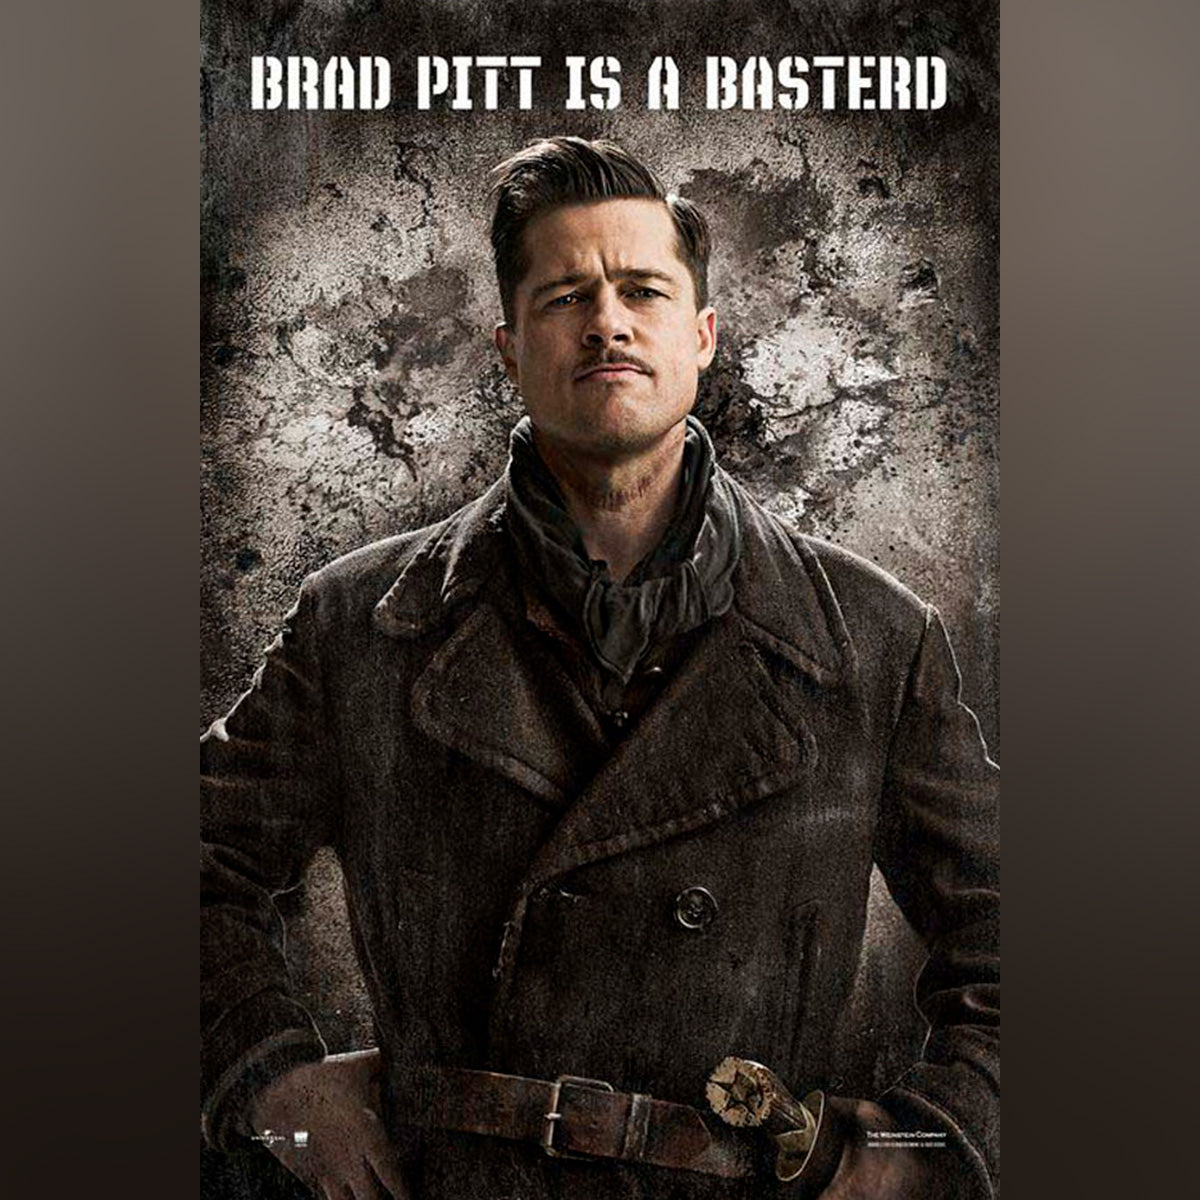 Original Movie Poster of Inglourious Basterds (2009)